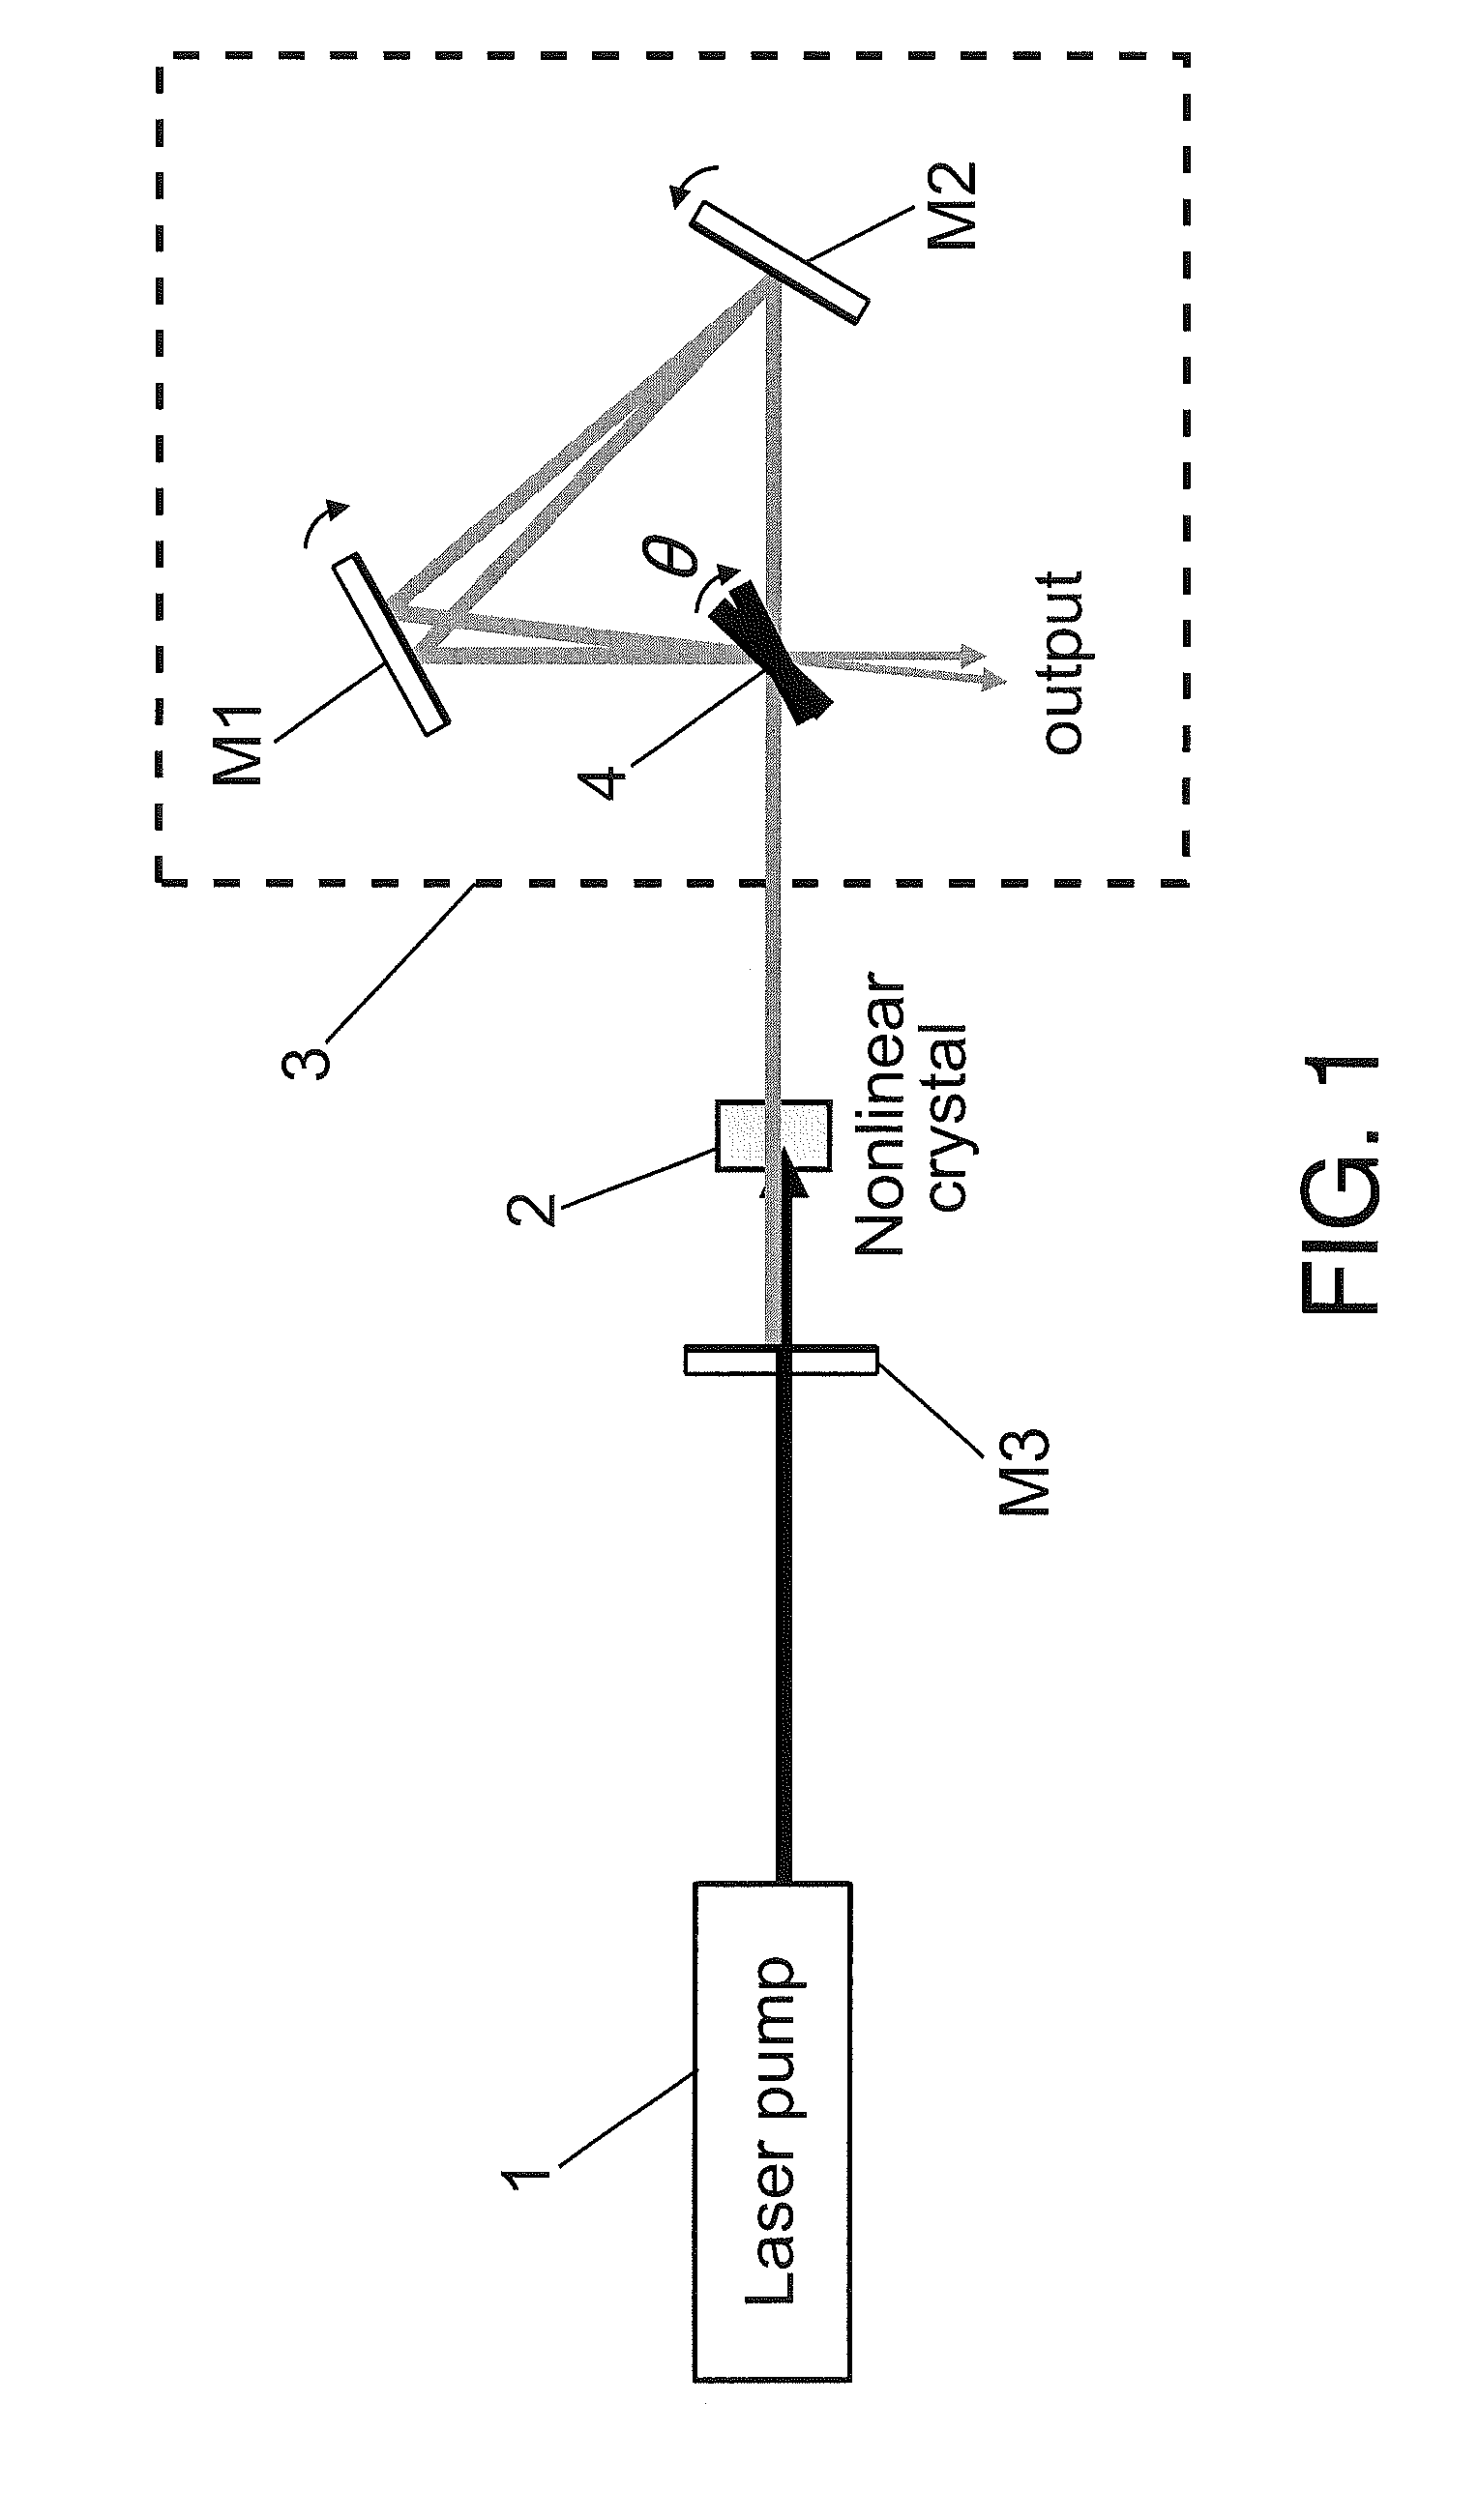 Optical parametric oscillator with optimized output coupling